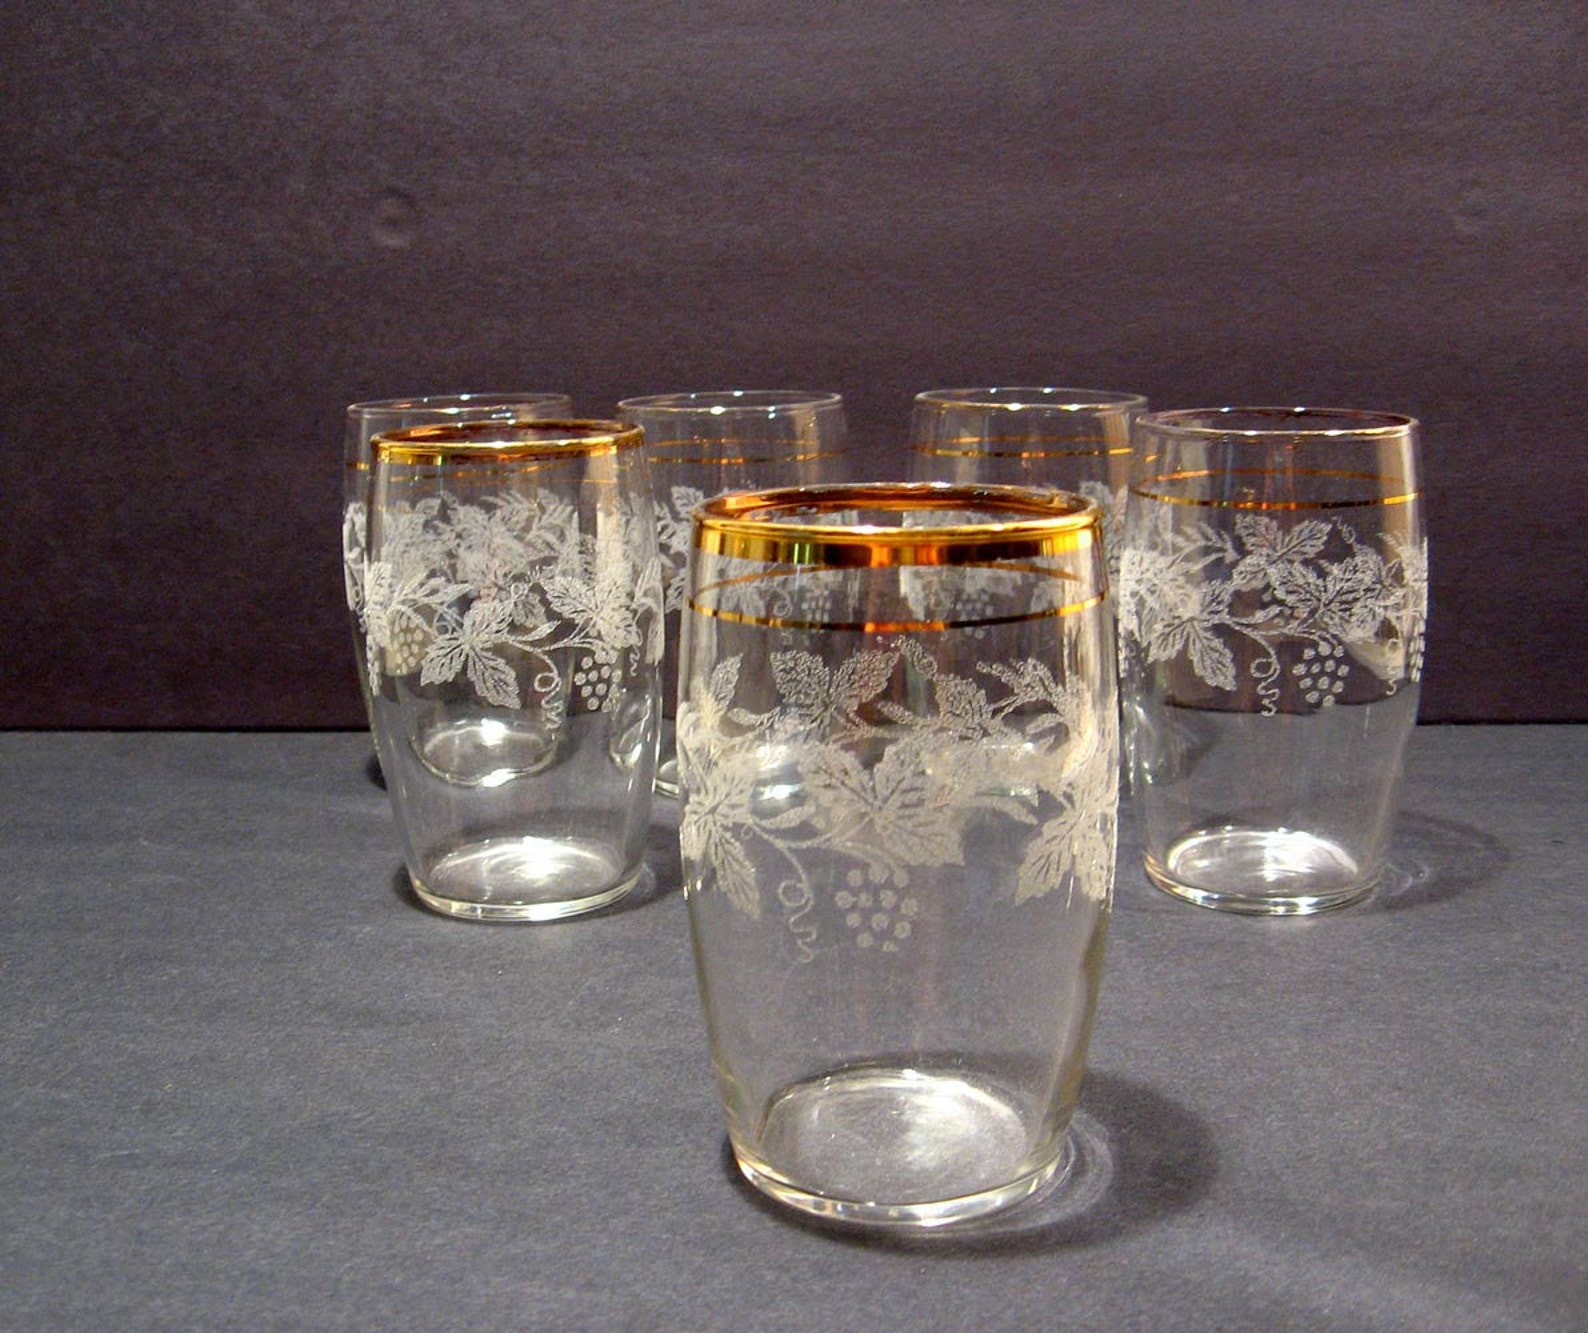 Vintage Etched Glass Tumblers Gold Rimmed Drinks Glasses Etsy